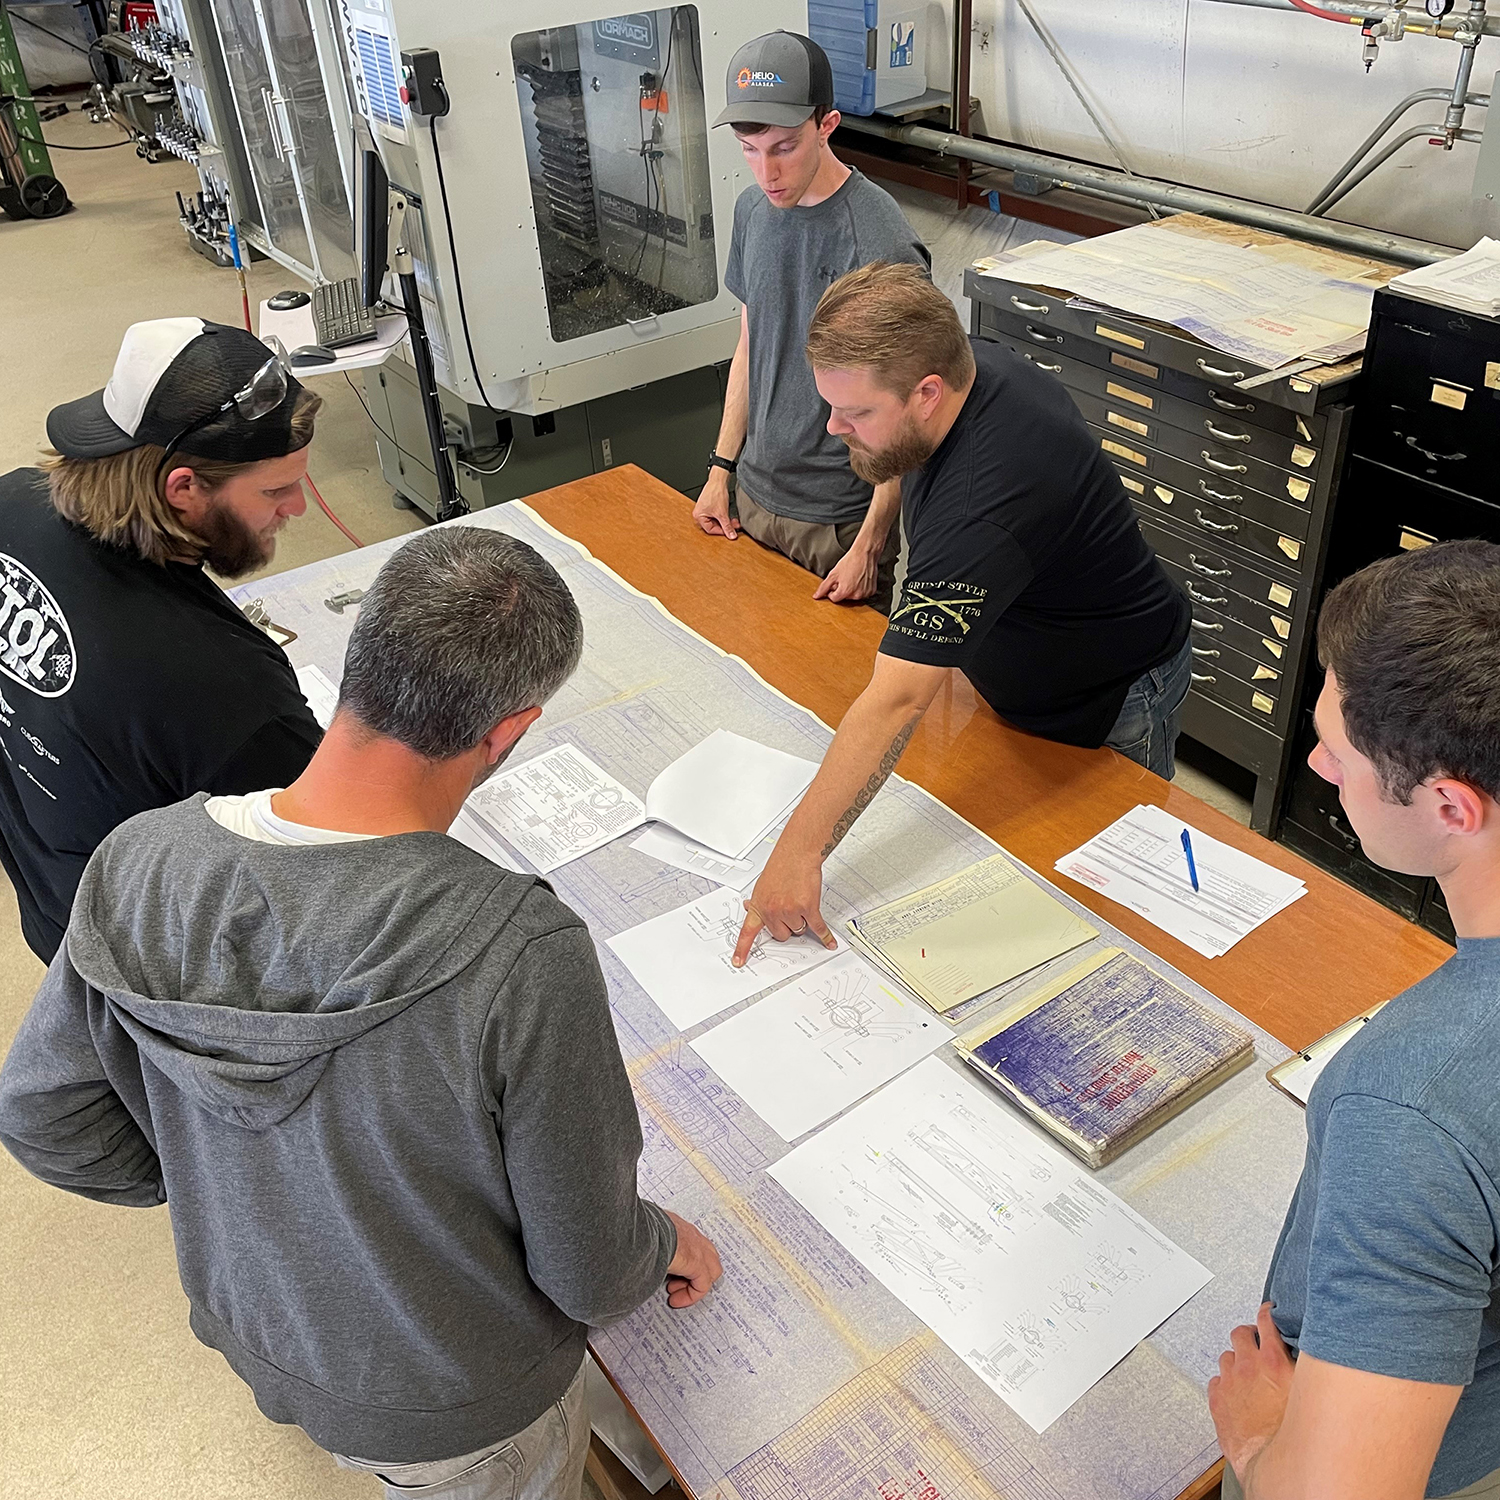 Several men look at engineering diagrams.